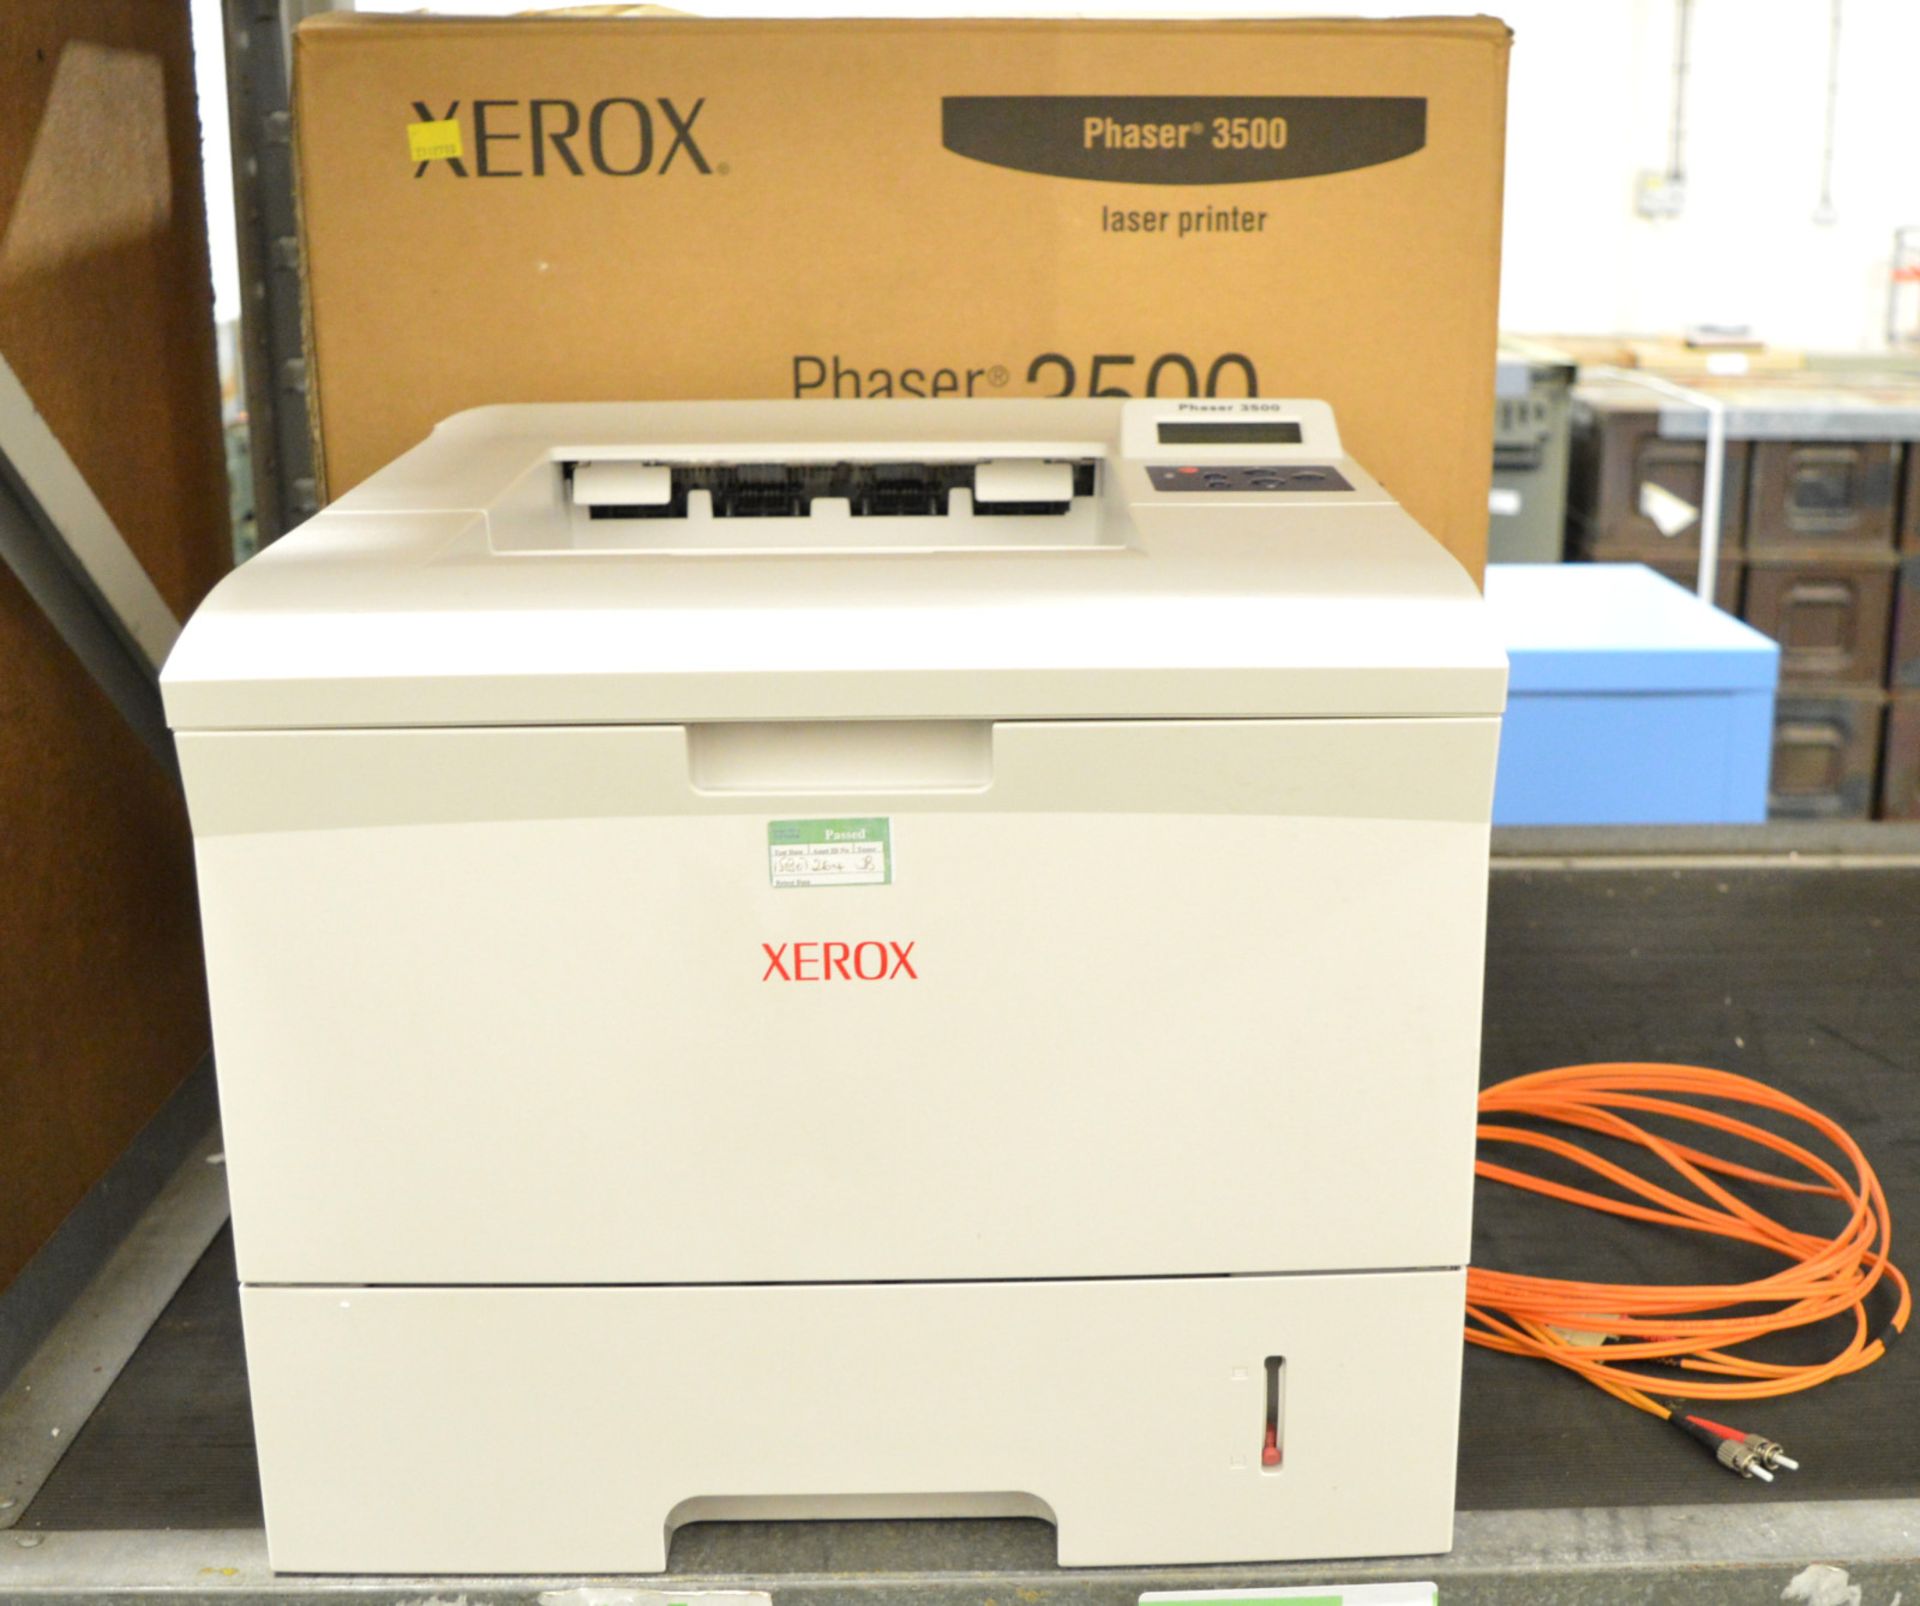 Xerox Phaser 3500 Laser Printer. - Image 5 of 6